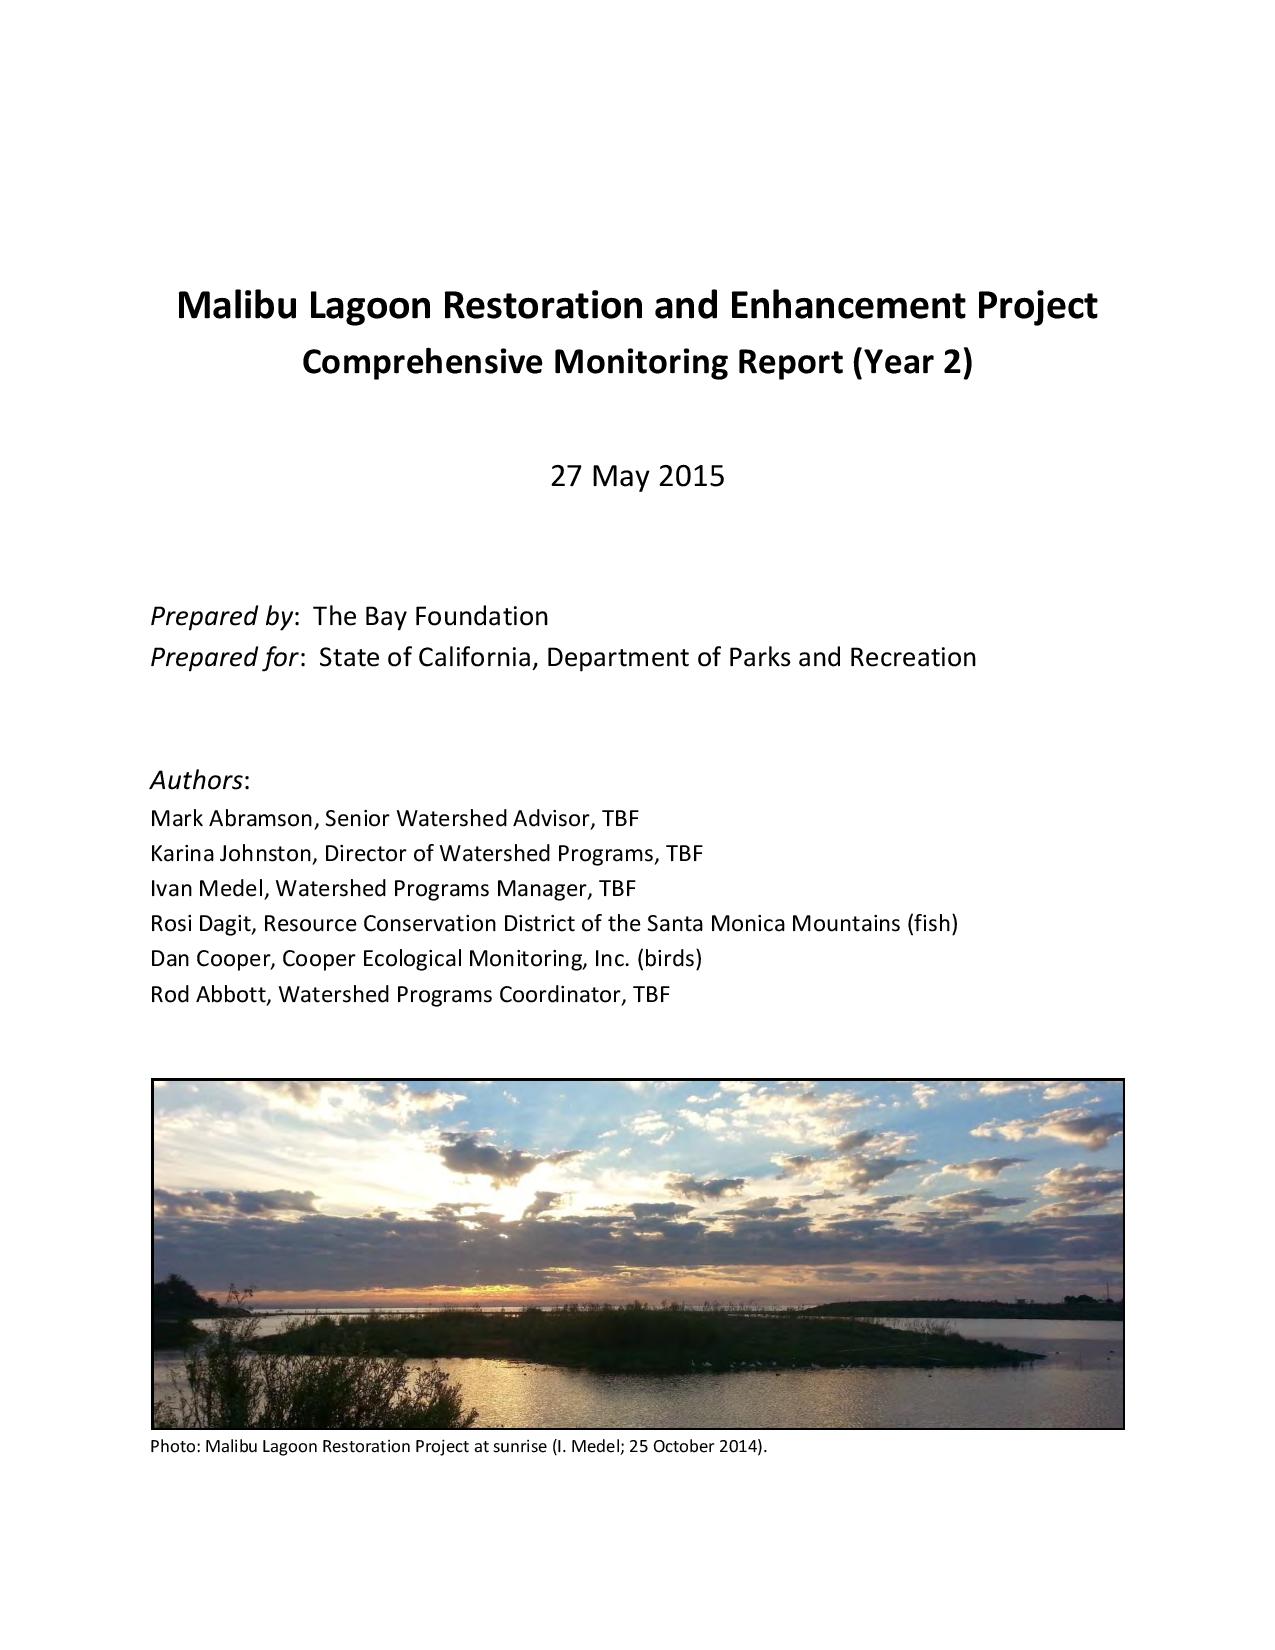 malibu-lagoon - Malibu-Lagoon_Comprehensive-Monitoring-Report_Yr2_web_secured-page-001